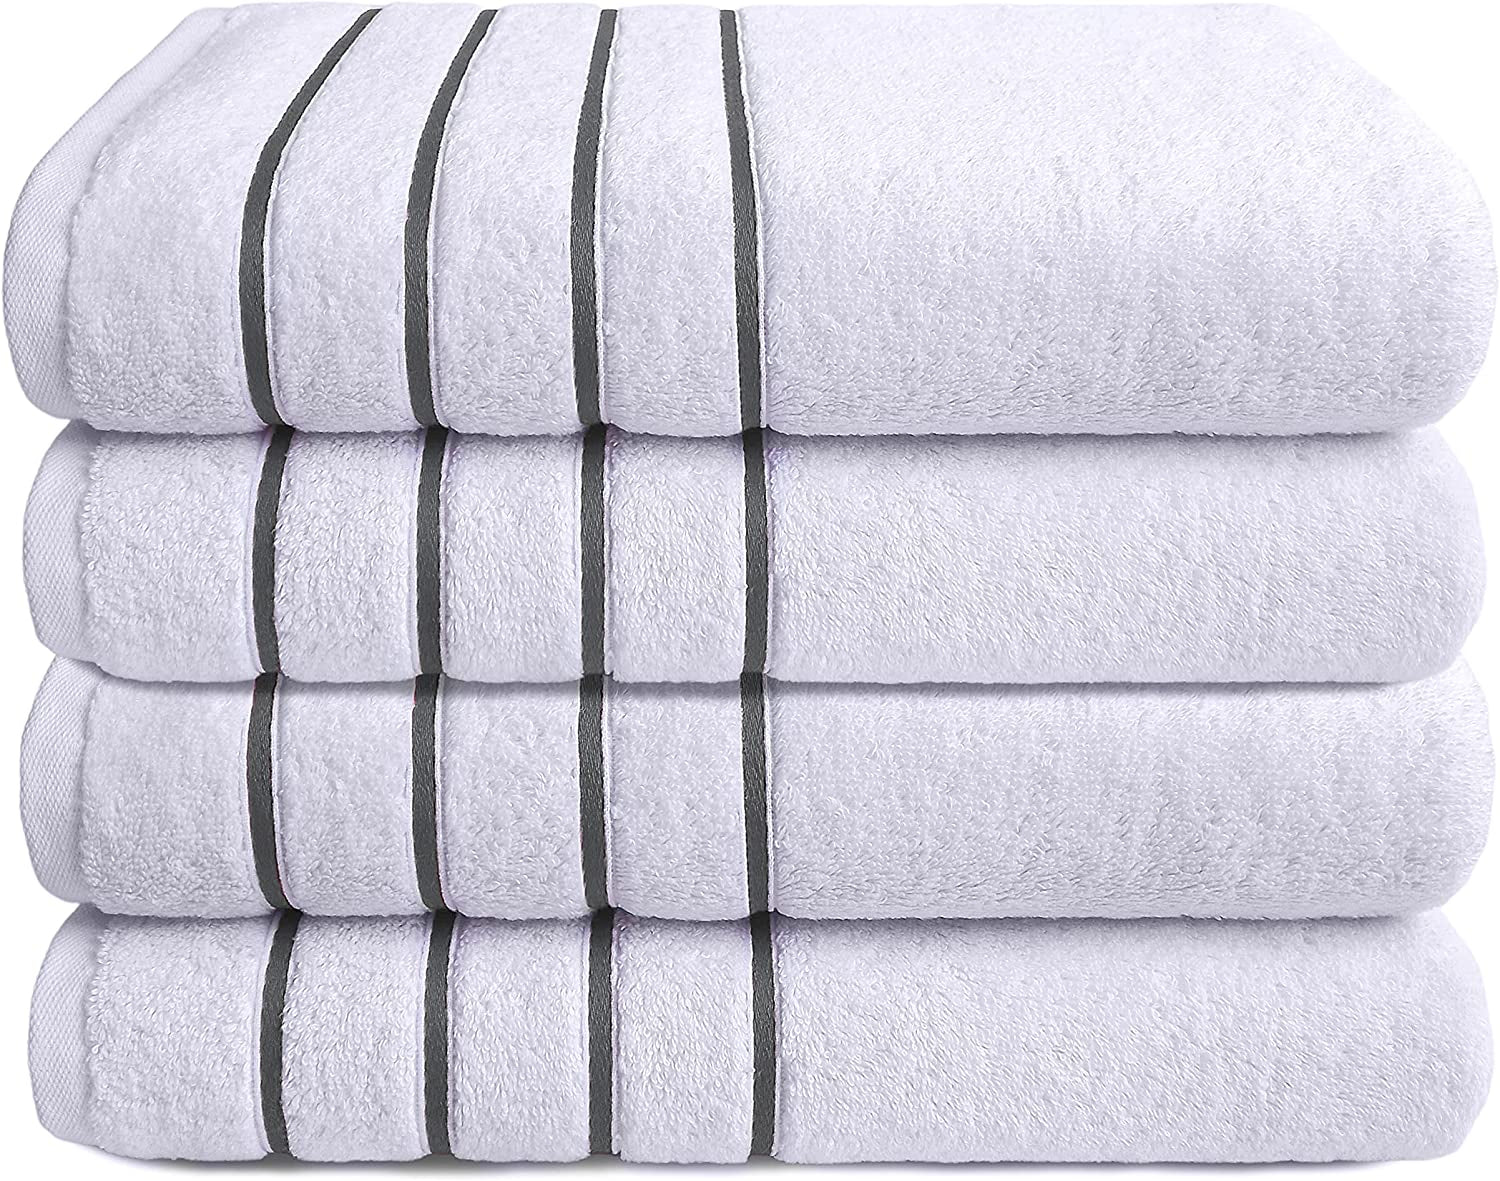 4 Packed White Bath Towel Set, 100% Turkish Cotton Bath Towels, 27X54 Inturkish Bath Towel Set for Bathroom, Dark Gray